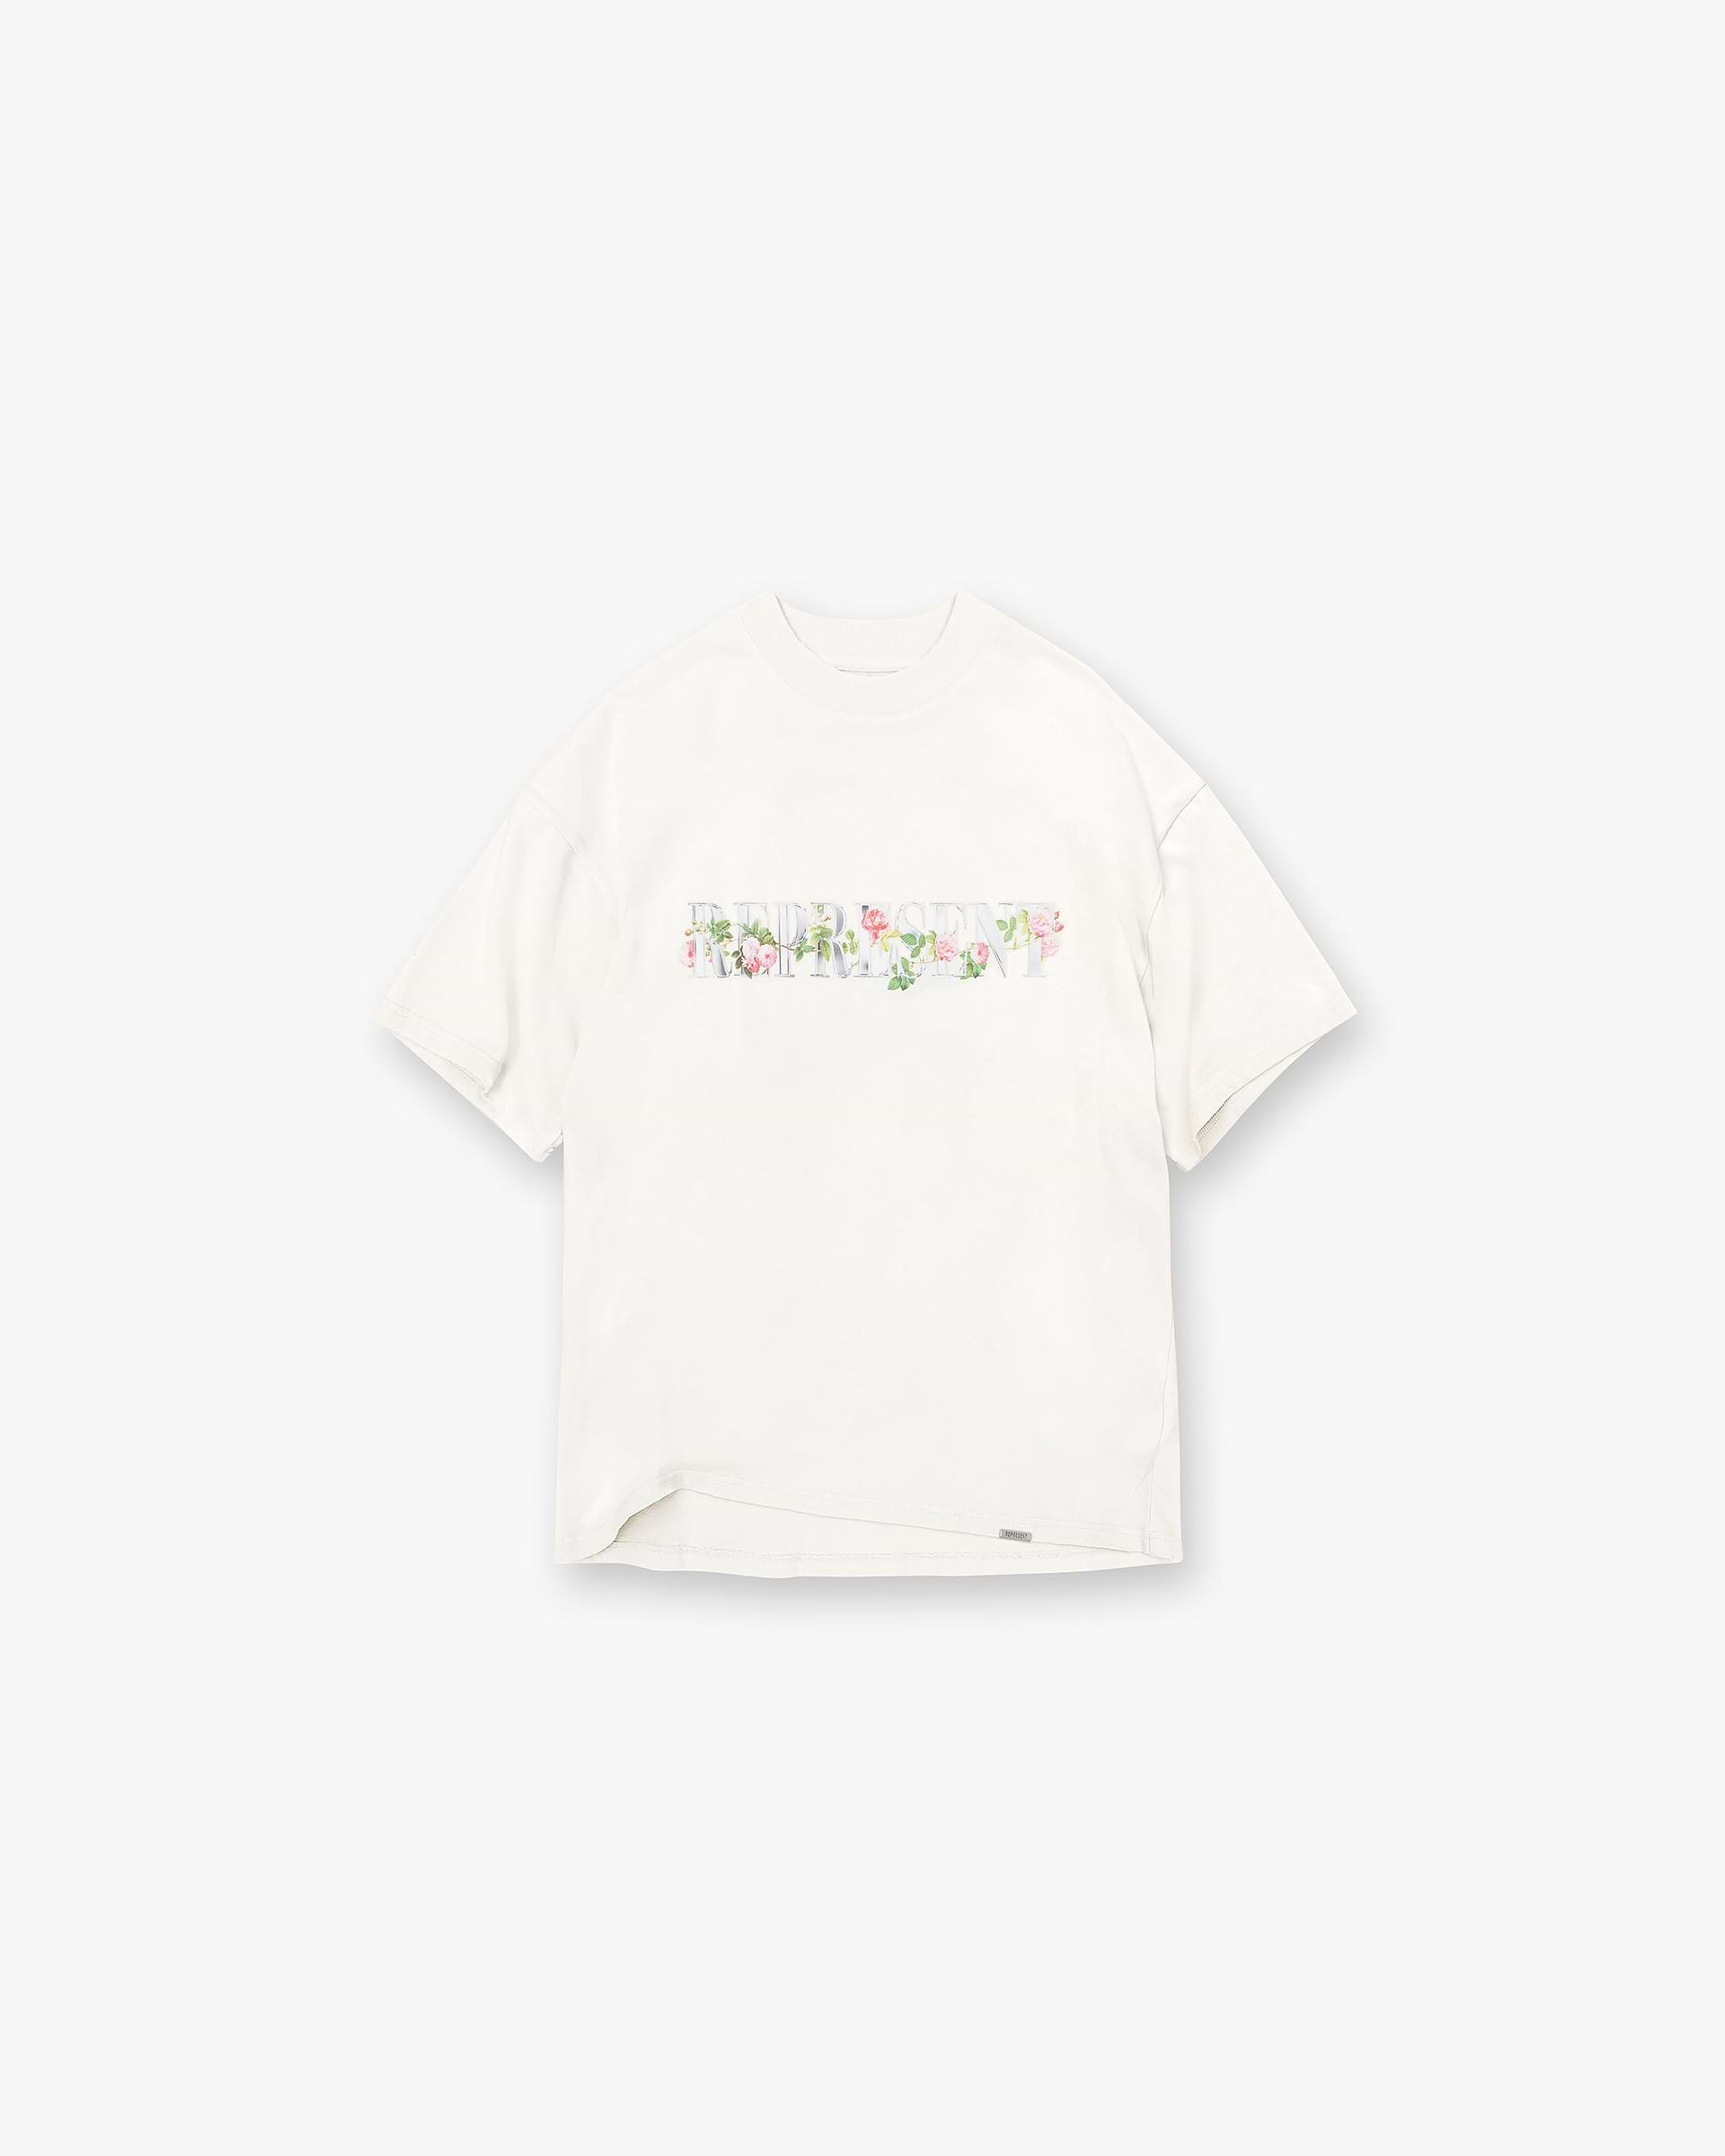 Floral Initial T-Shirt | Flat White T-Shirts SC23 | Represent Clo